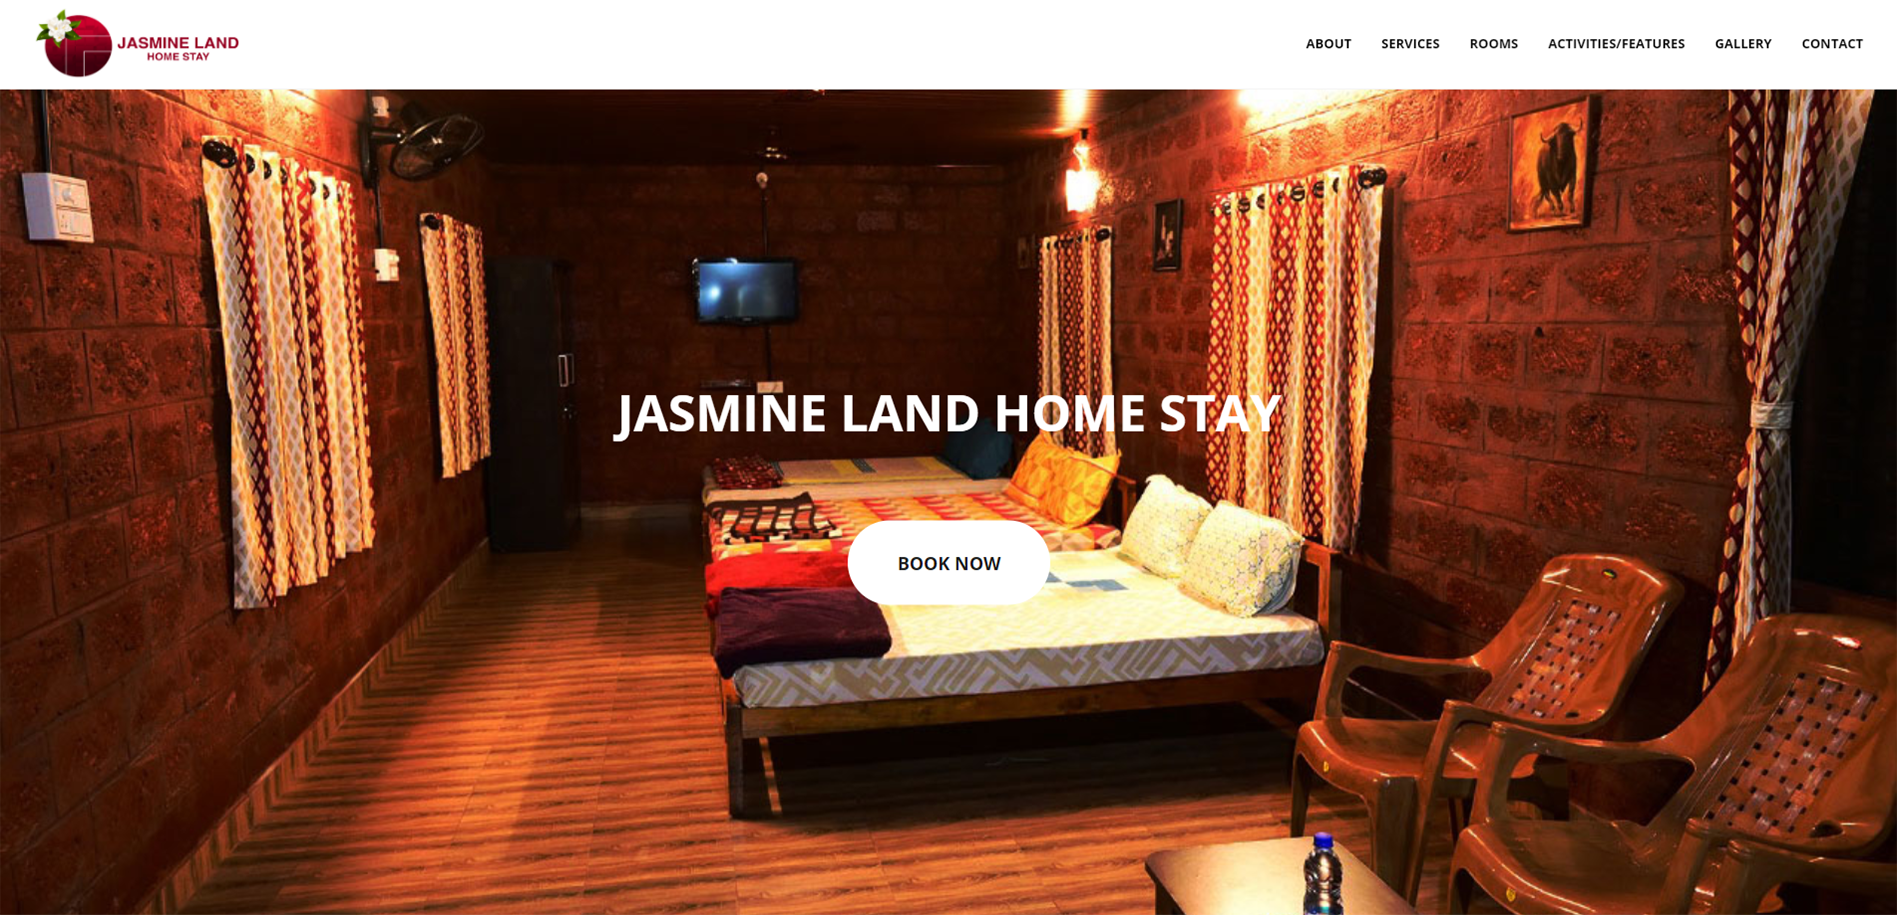 JASMINE LAND HOME STAY